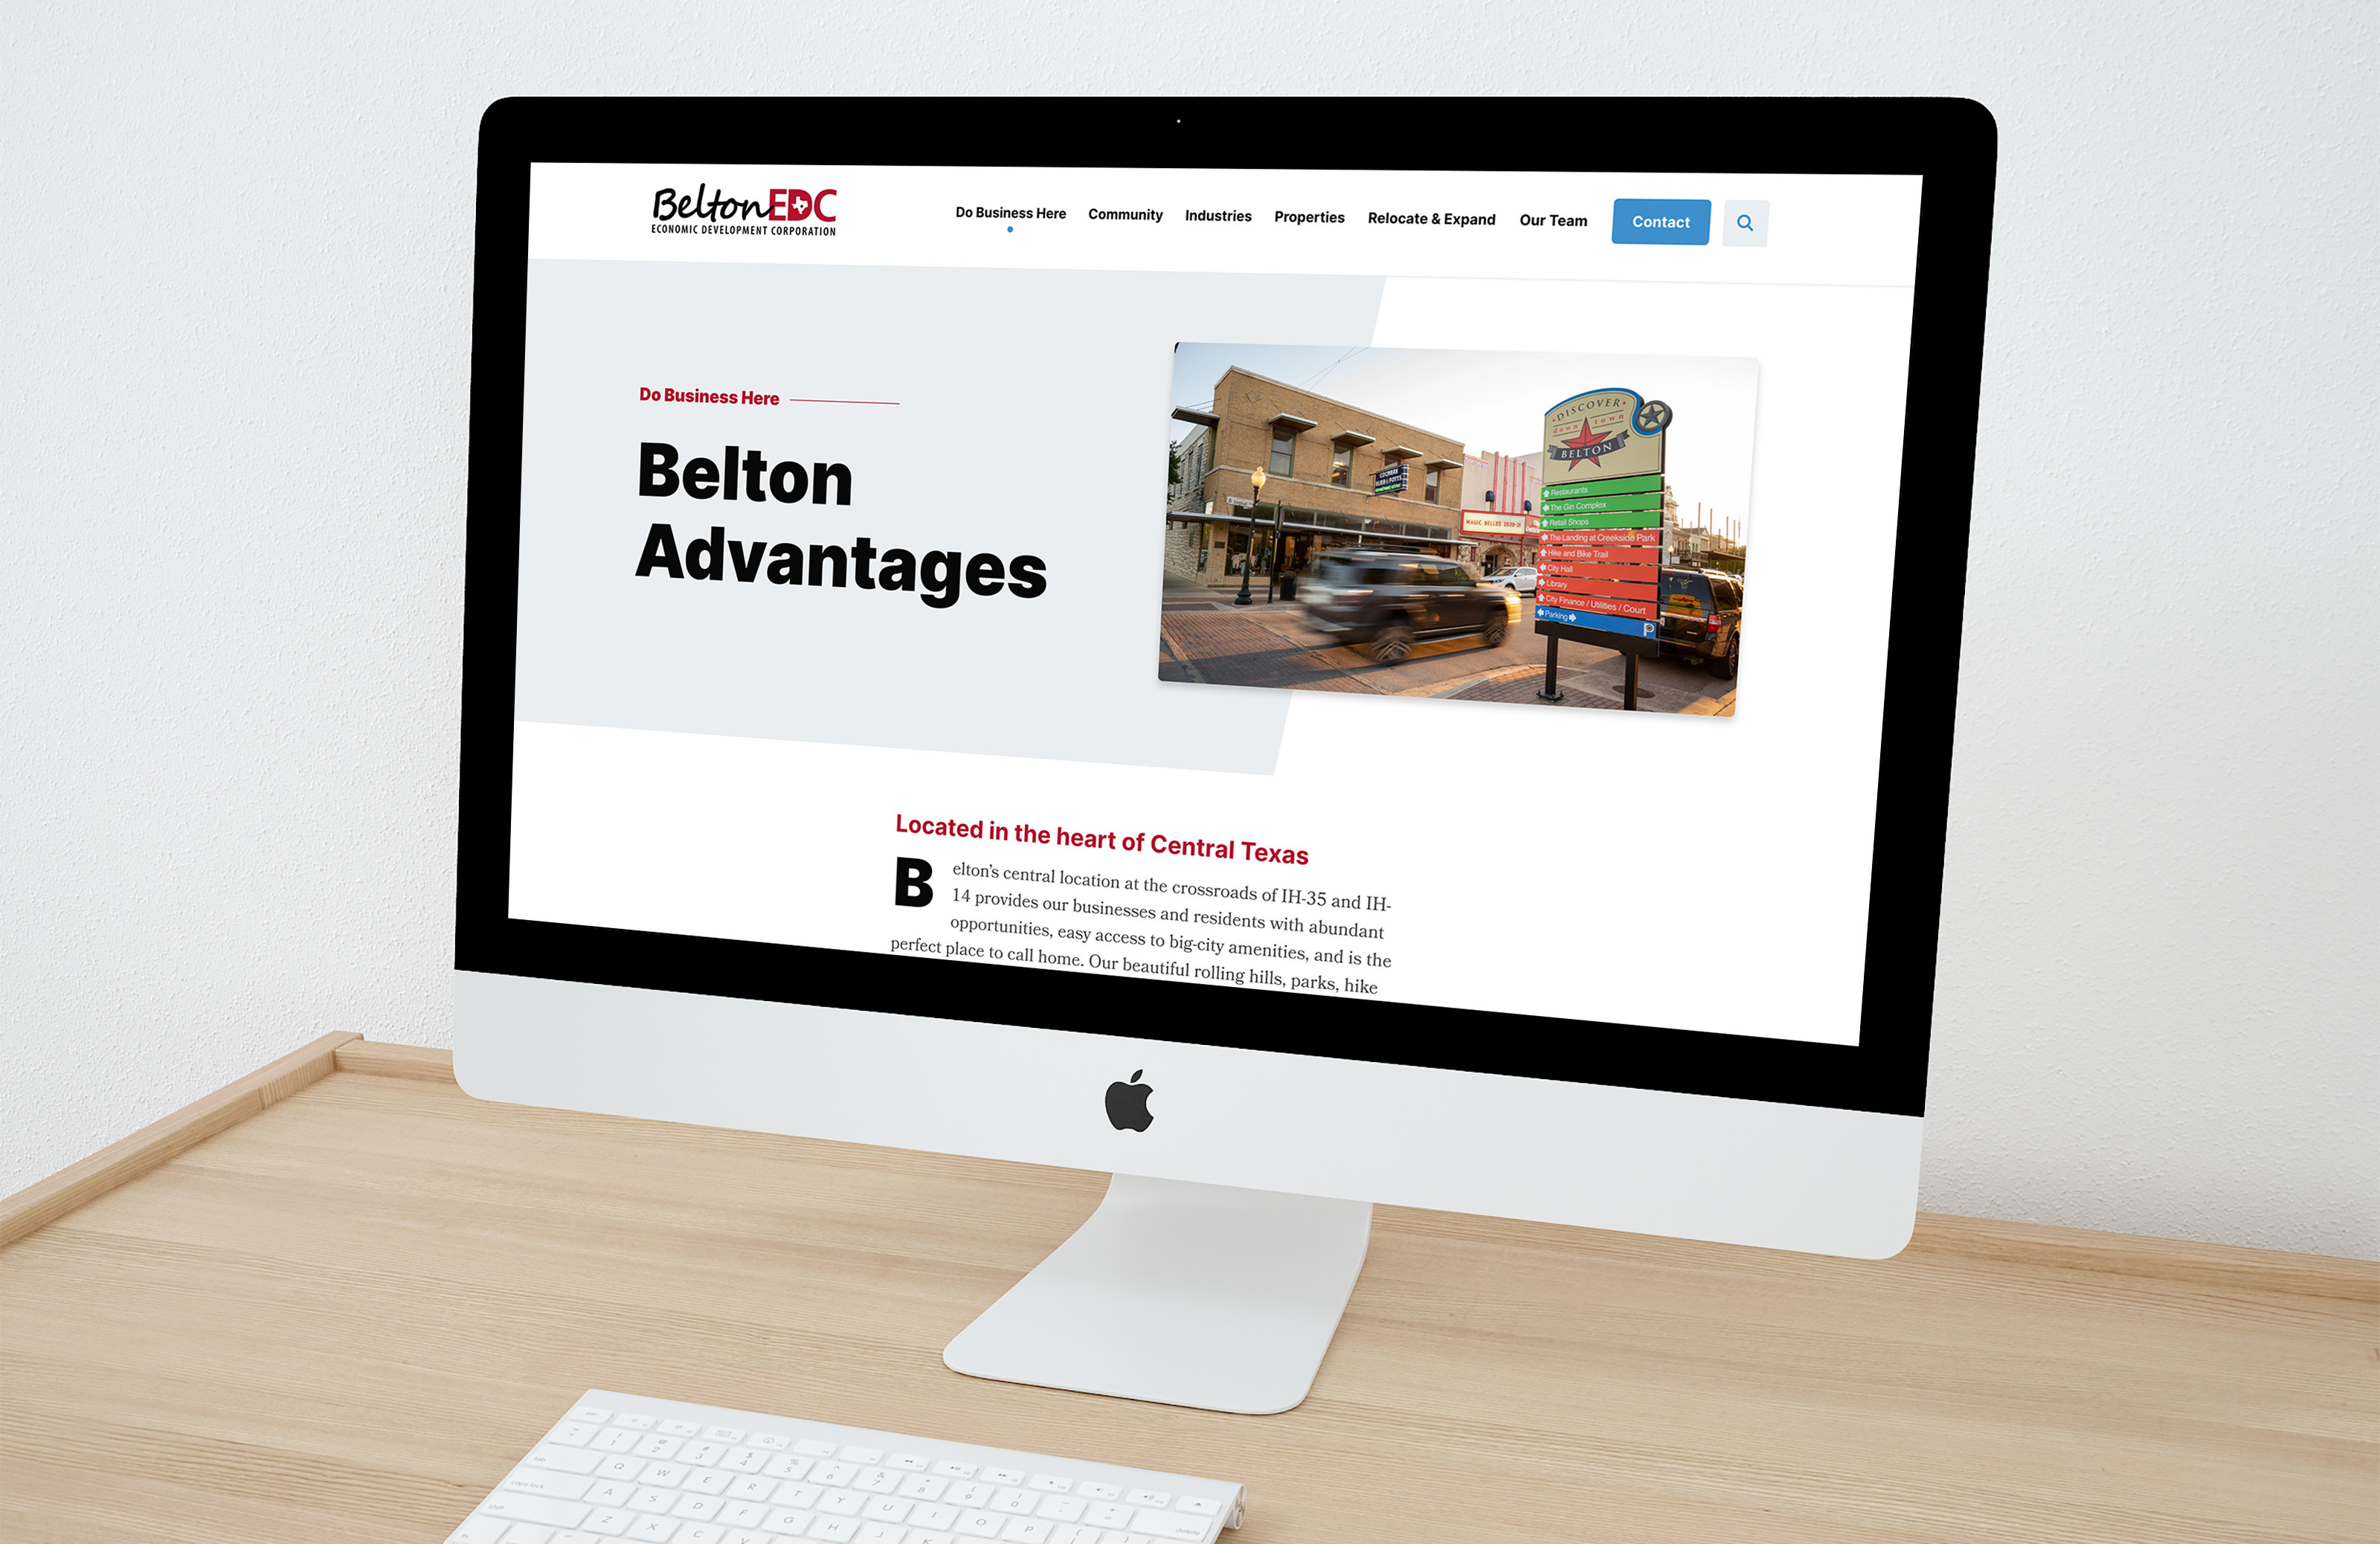 Belton EDC Advantages page on a full width moniter